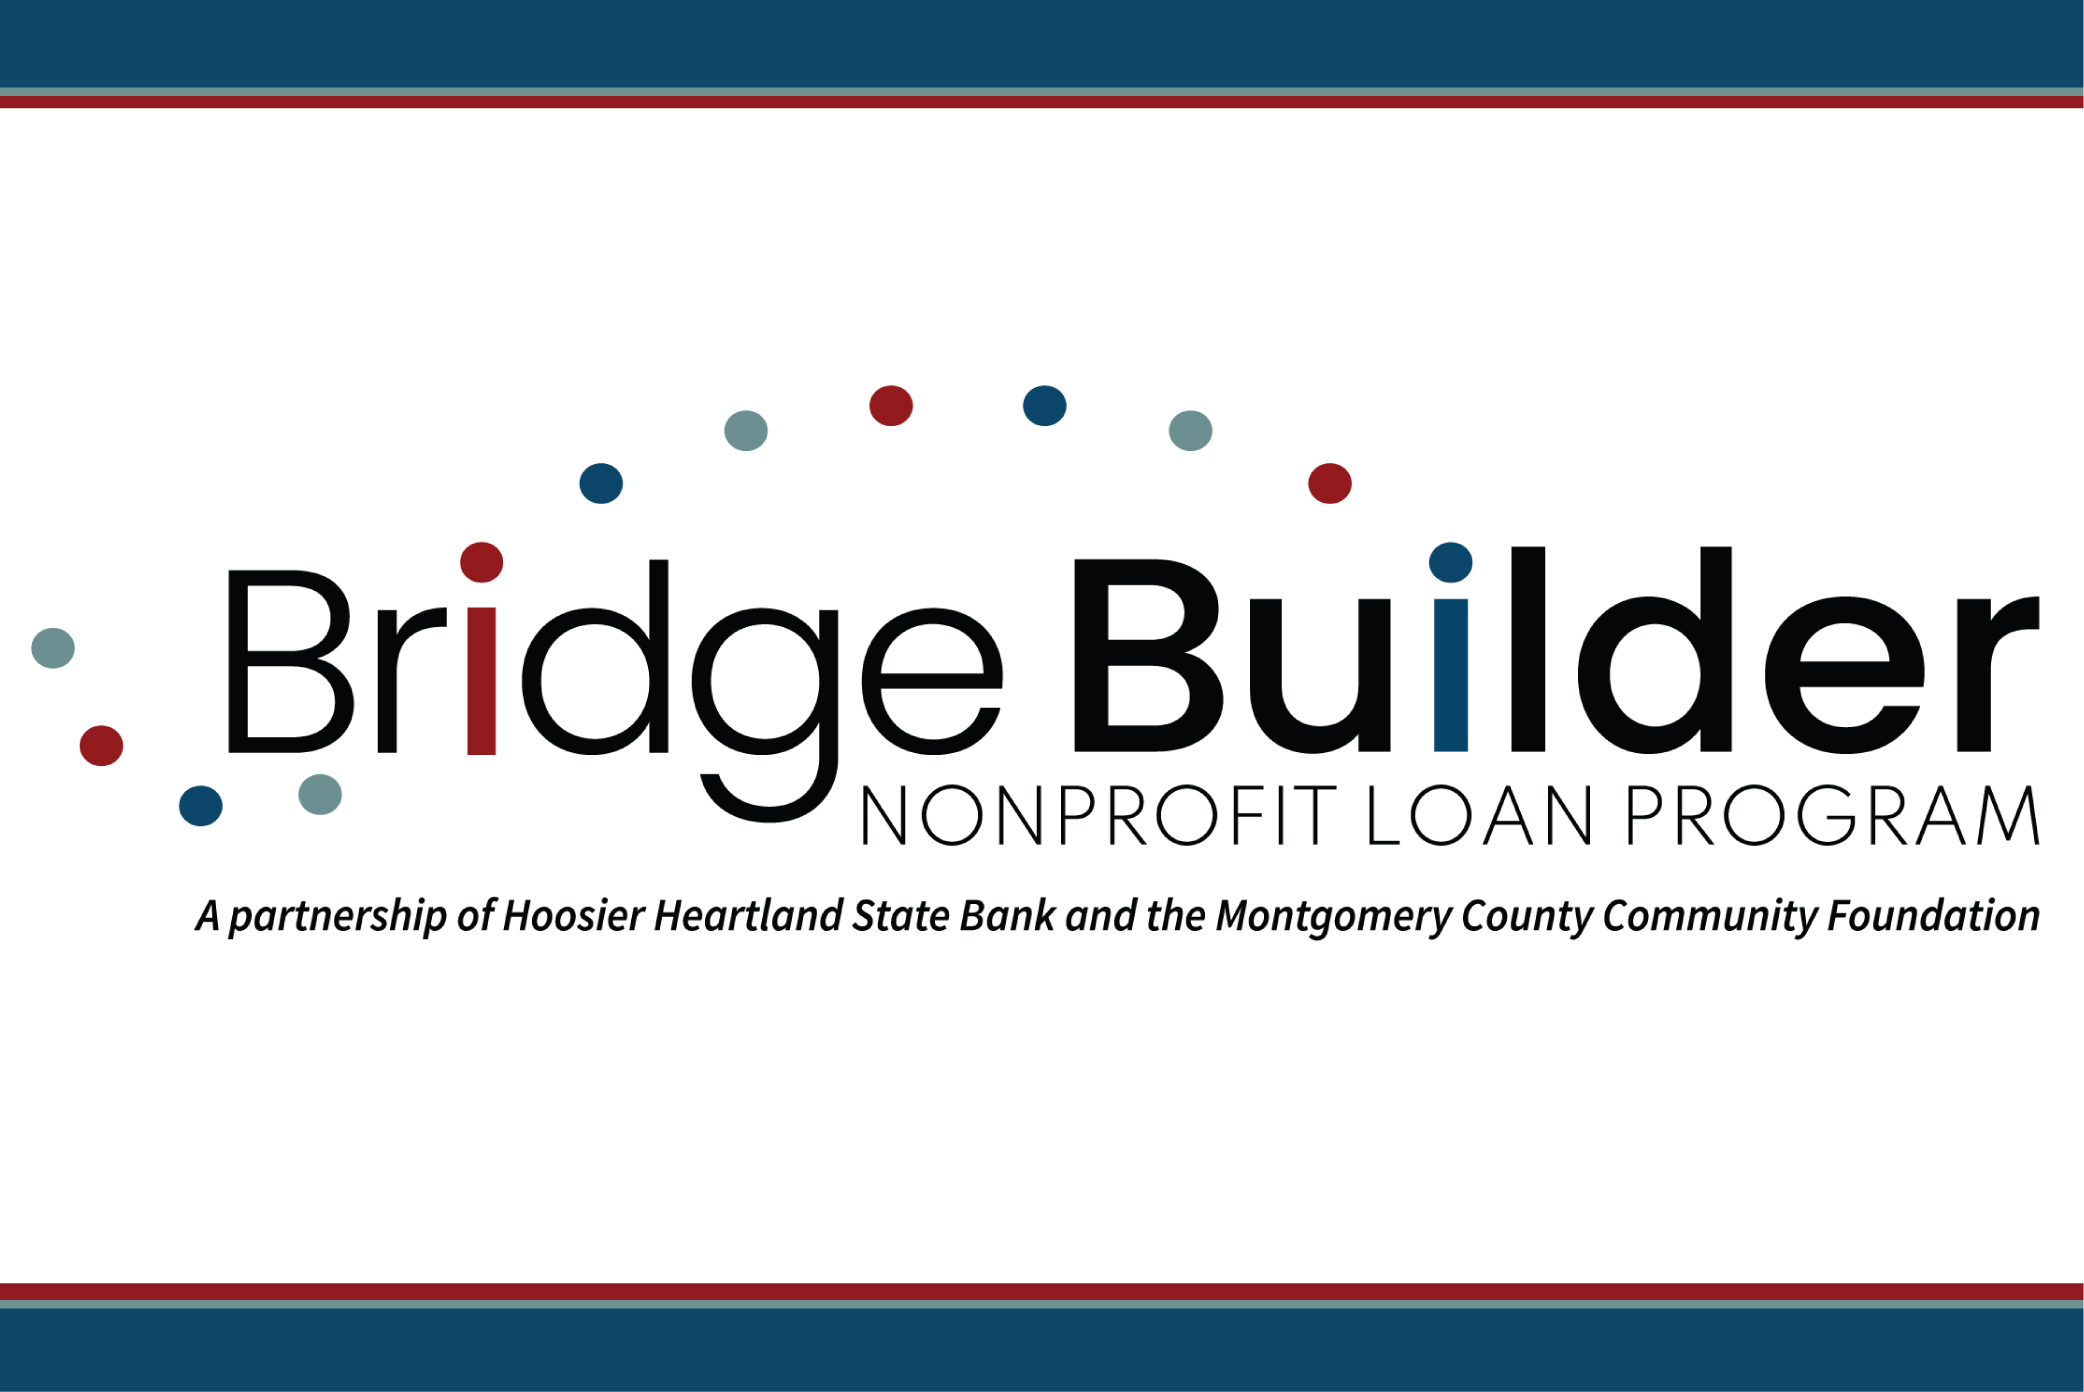 Bridge Builder nonprofit loan program logo